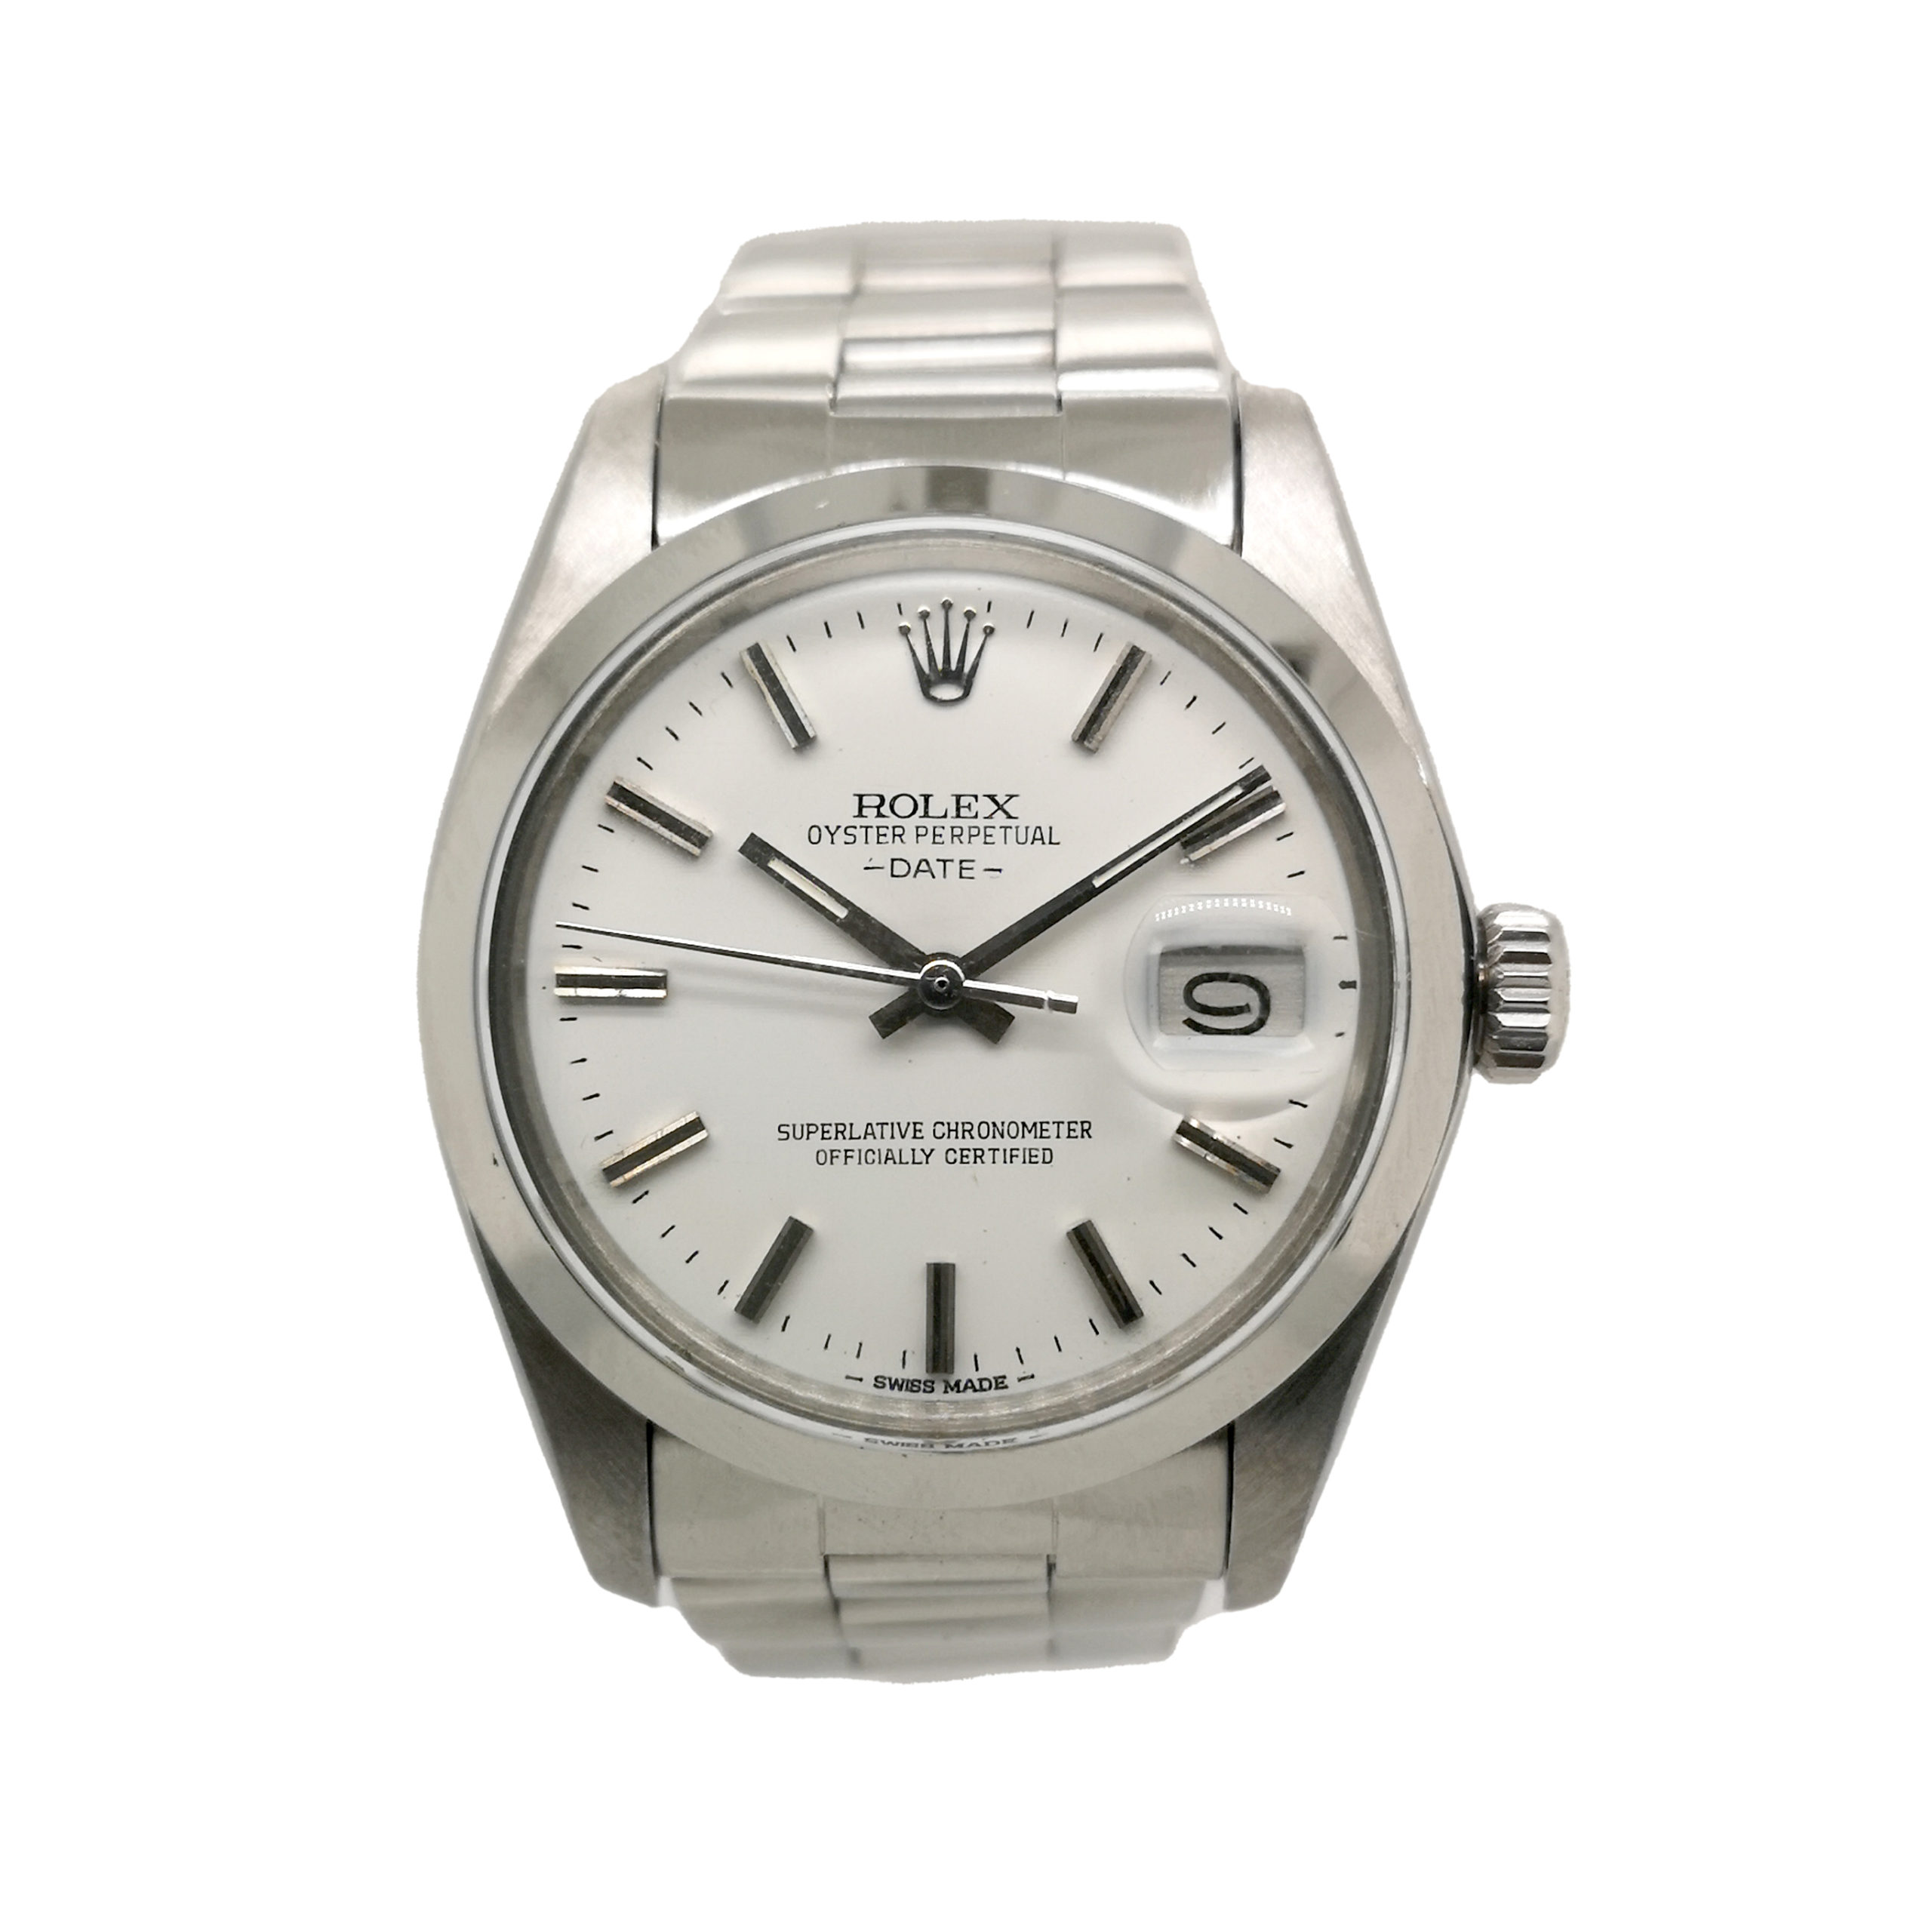 Rolex Oyster Perpetual Date 15000 Watch